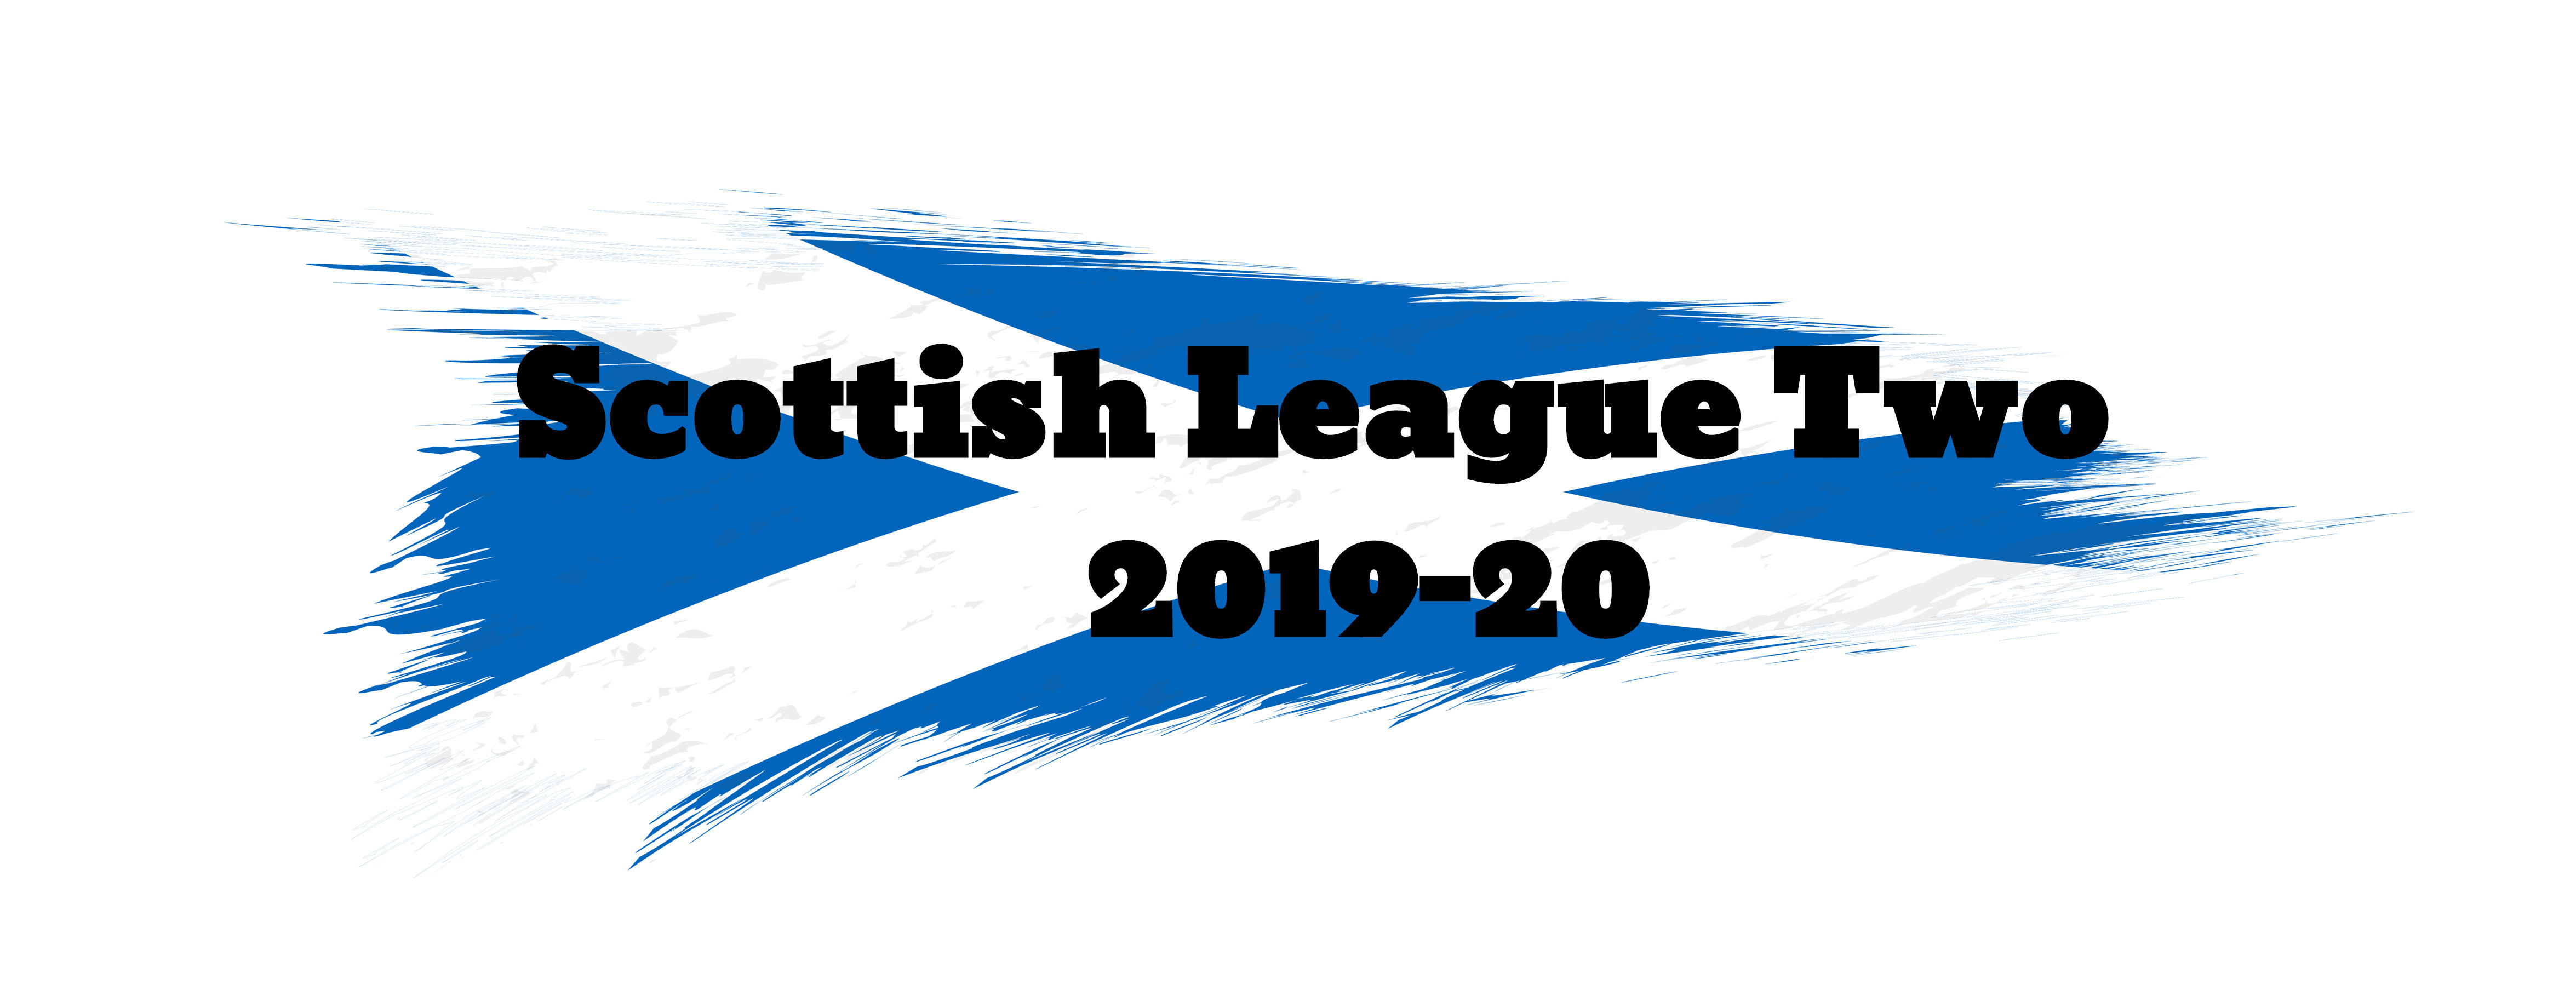 Scottish League Two 2019/20 Season Prediction